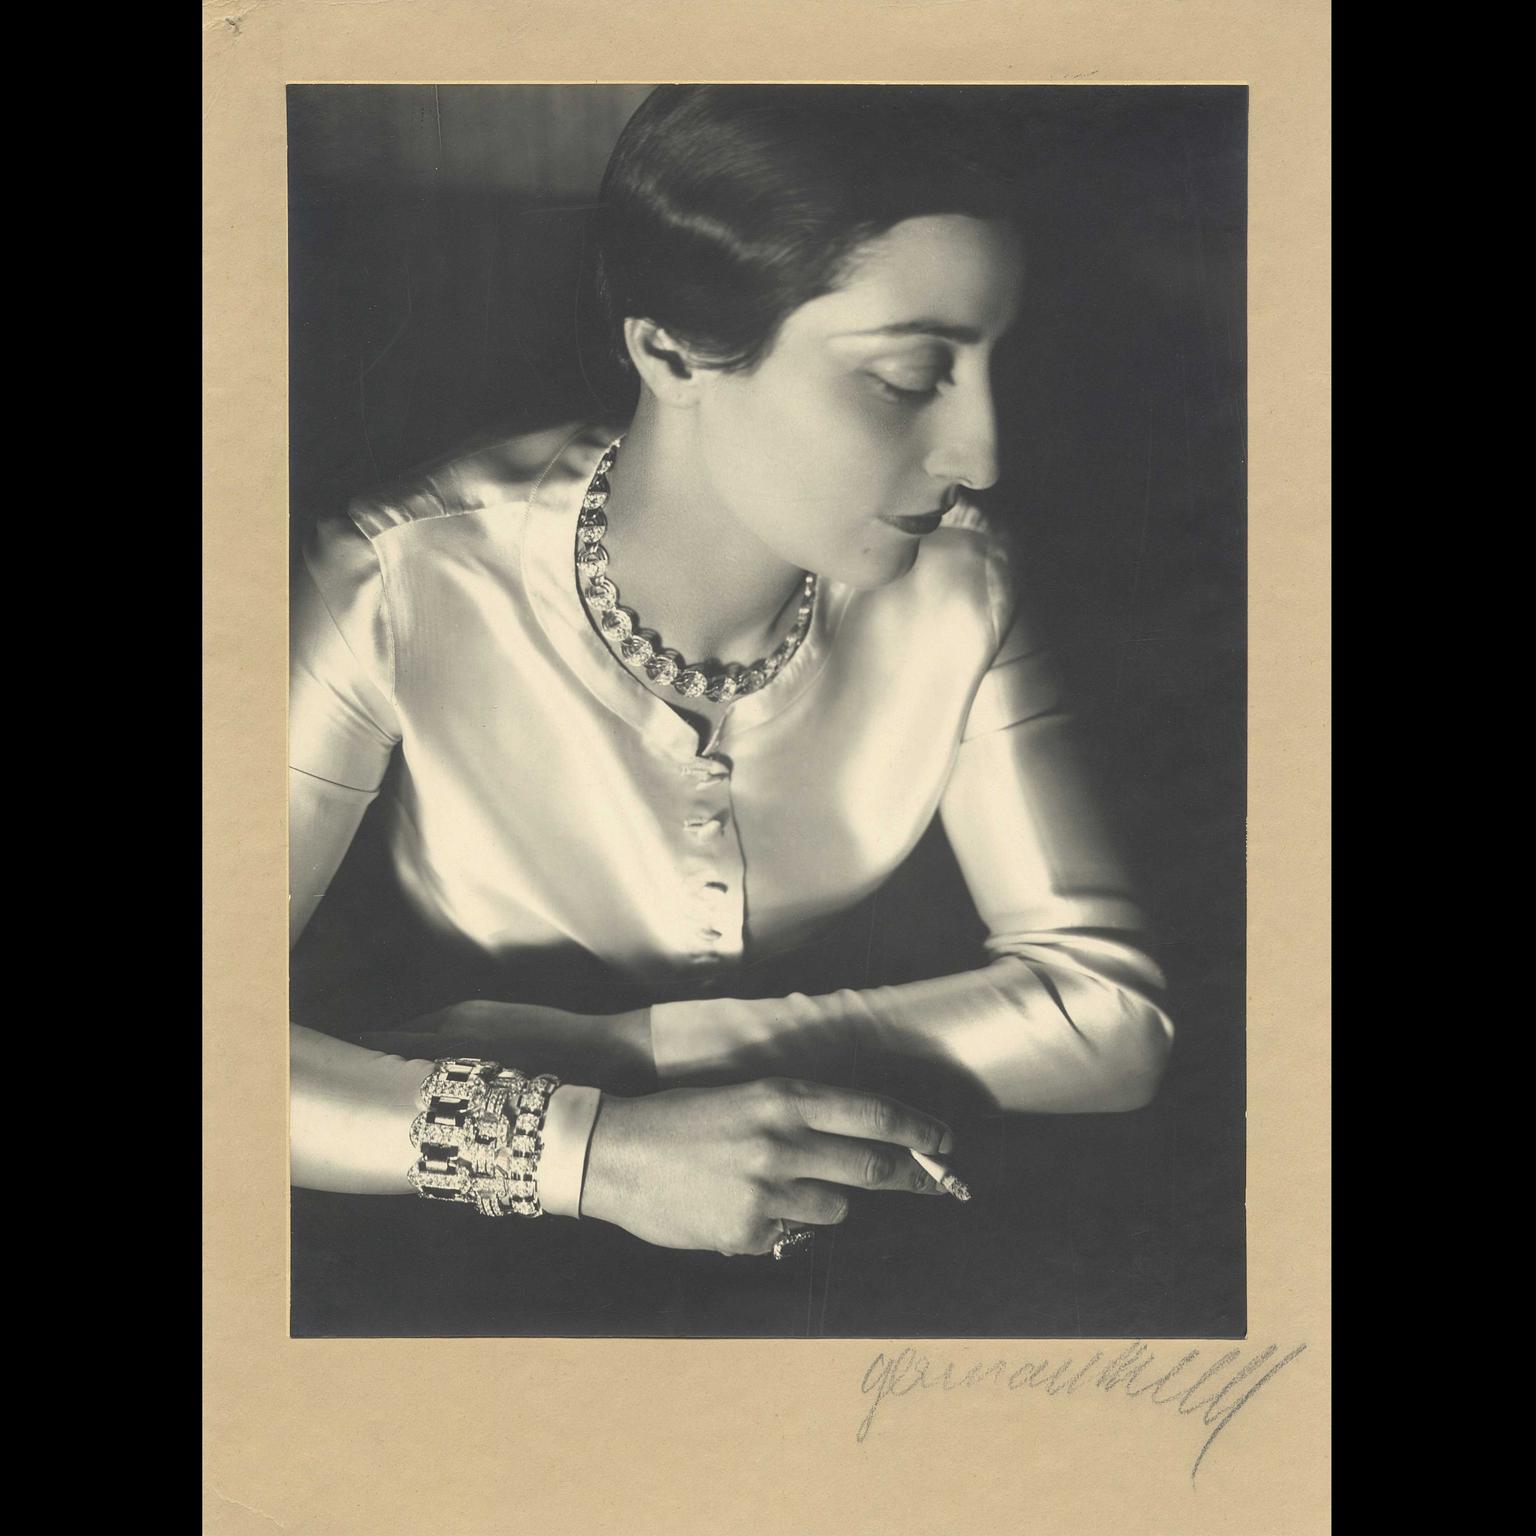 Christies auction Germaine Krull photo 1930